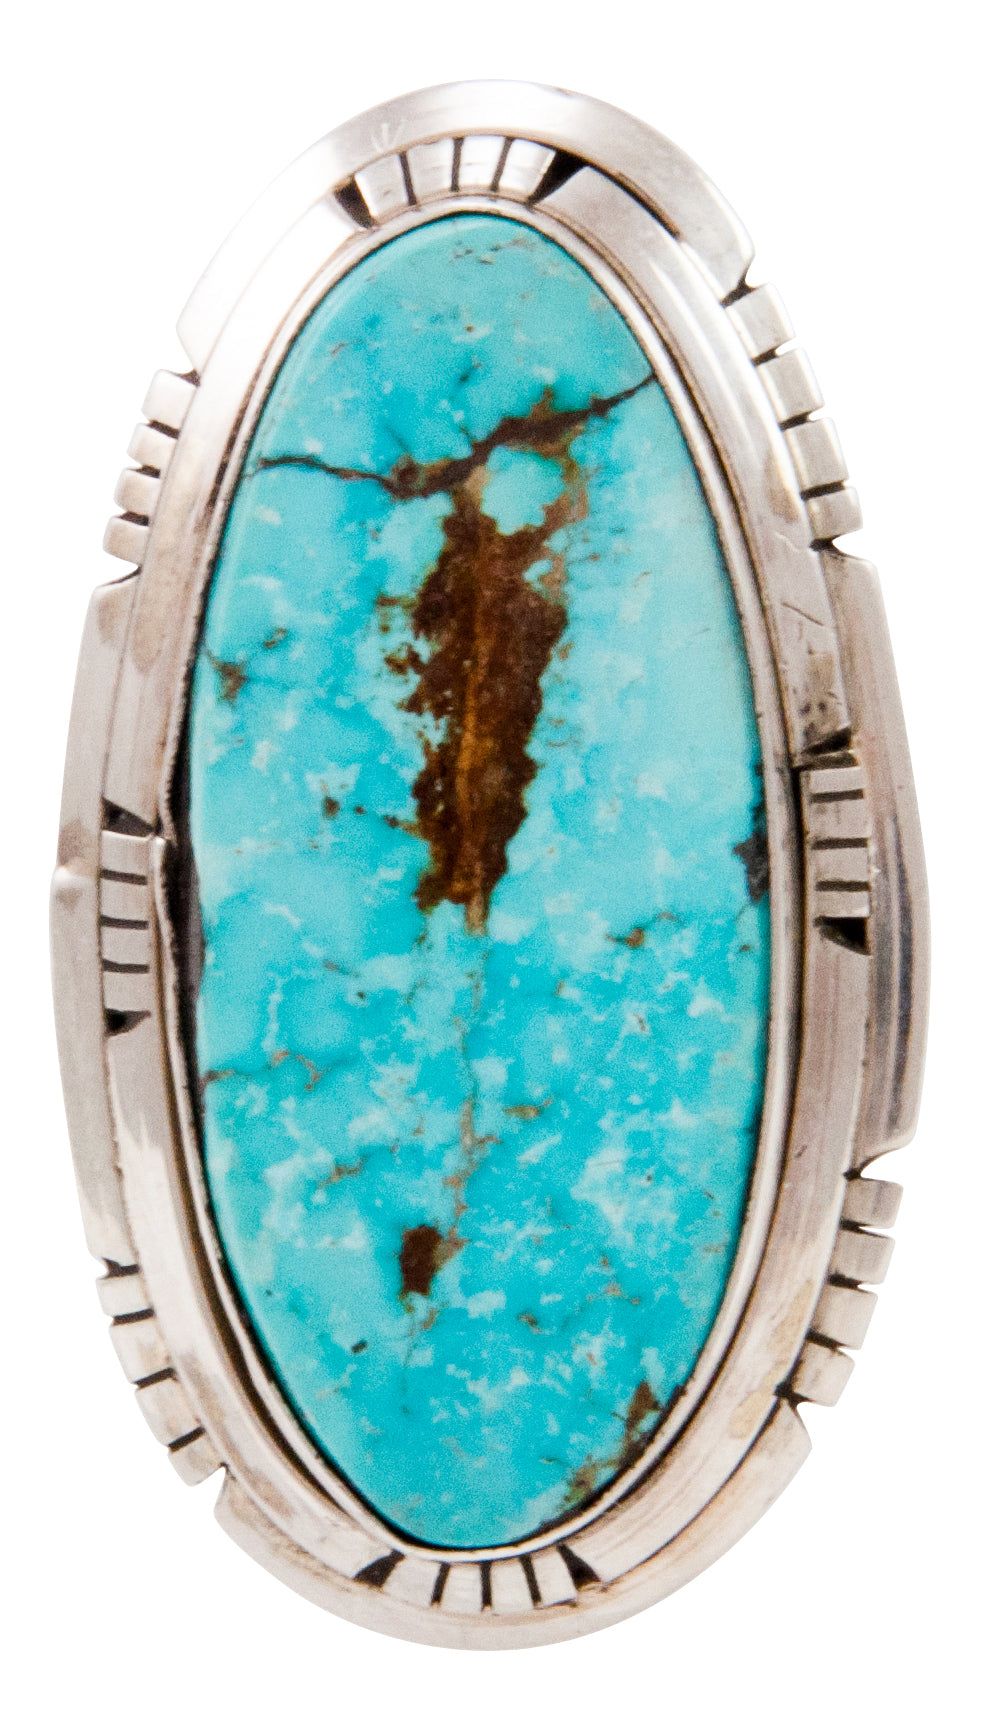 Navajo Native American Blue Ridge Turquoise Ring Size 7 by Skeets SKU233005